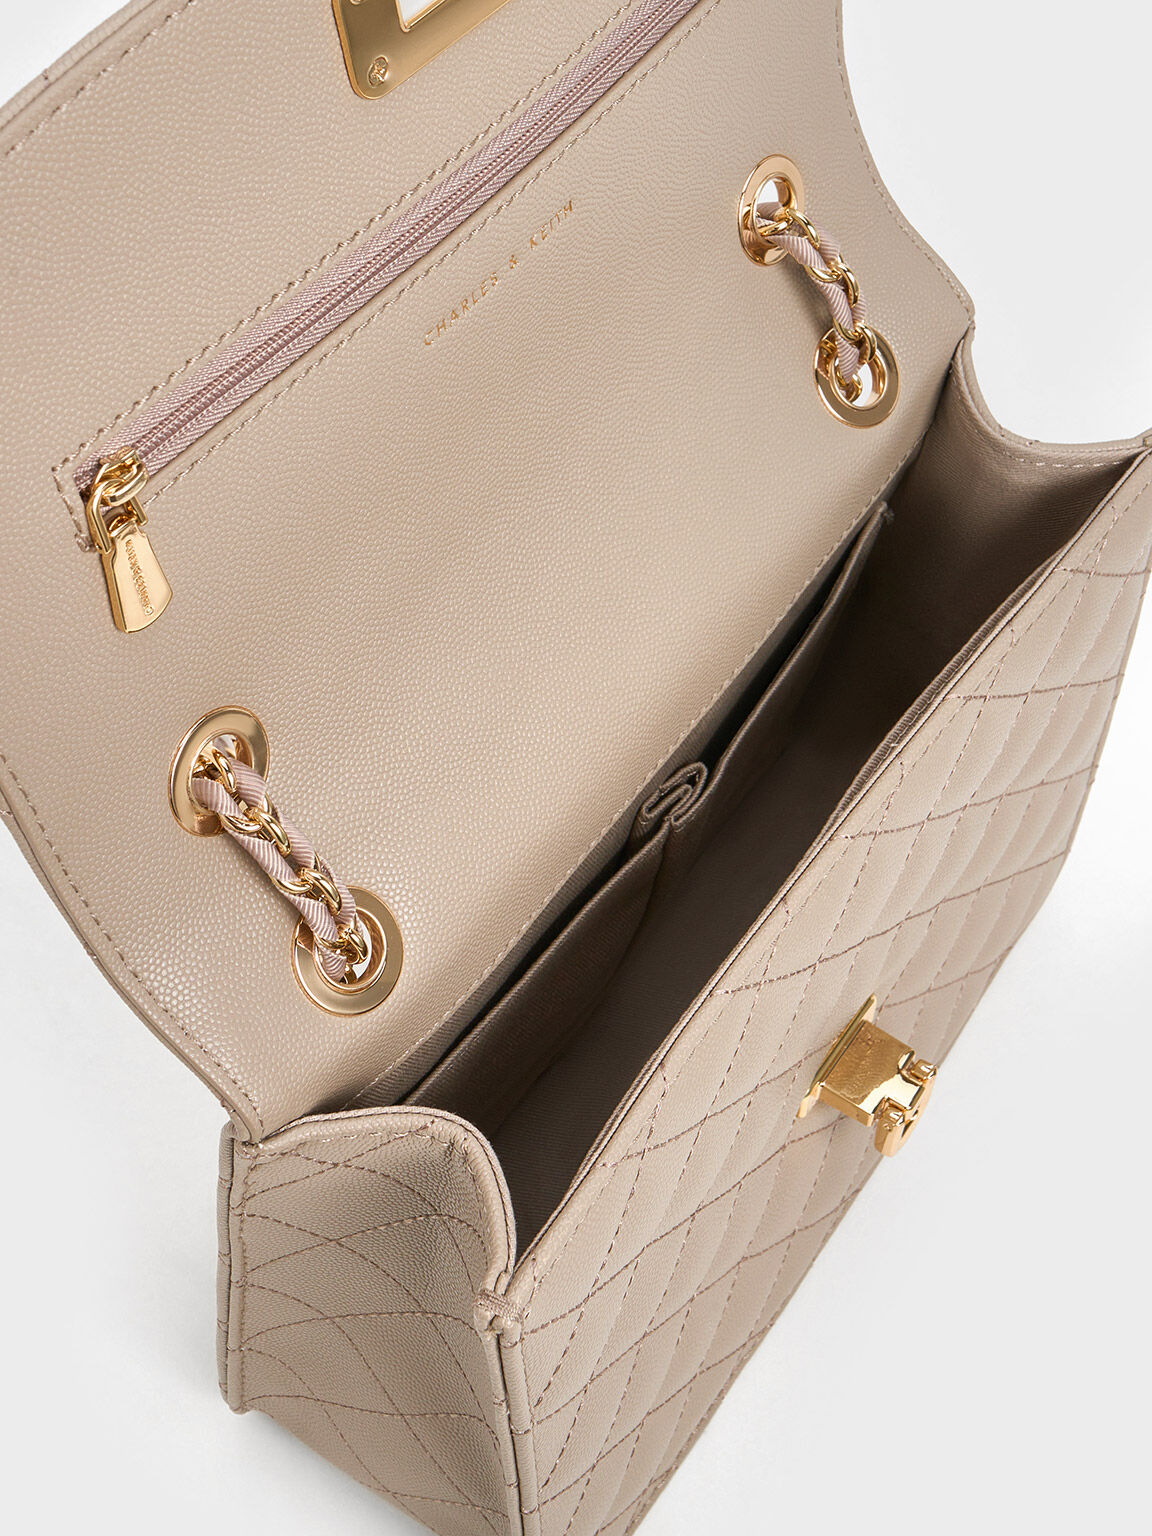 Chic Taupe Handbag - Vegan Leather Handbag - Structured Bag - Lulus